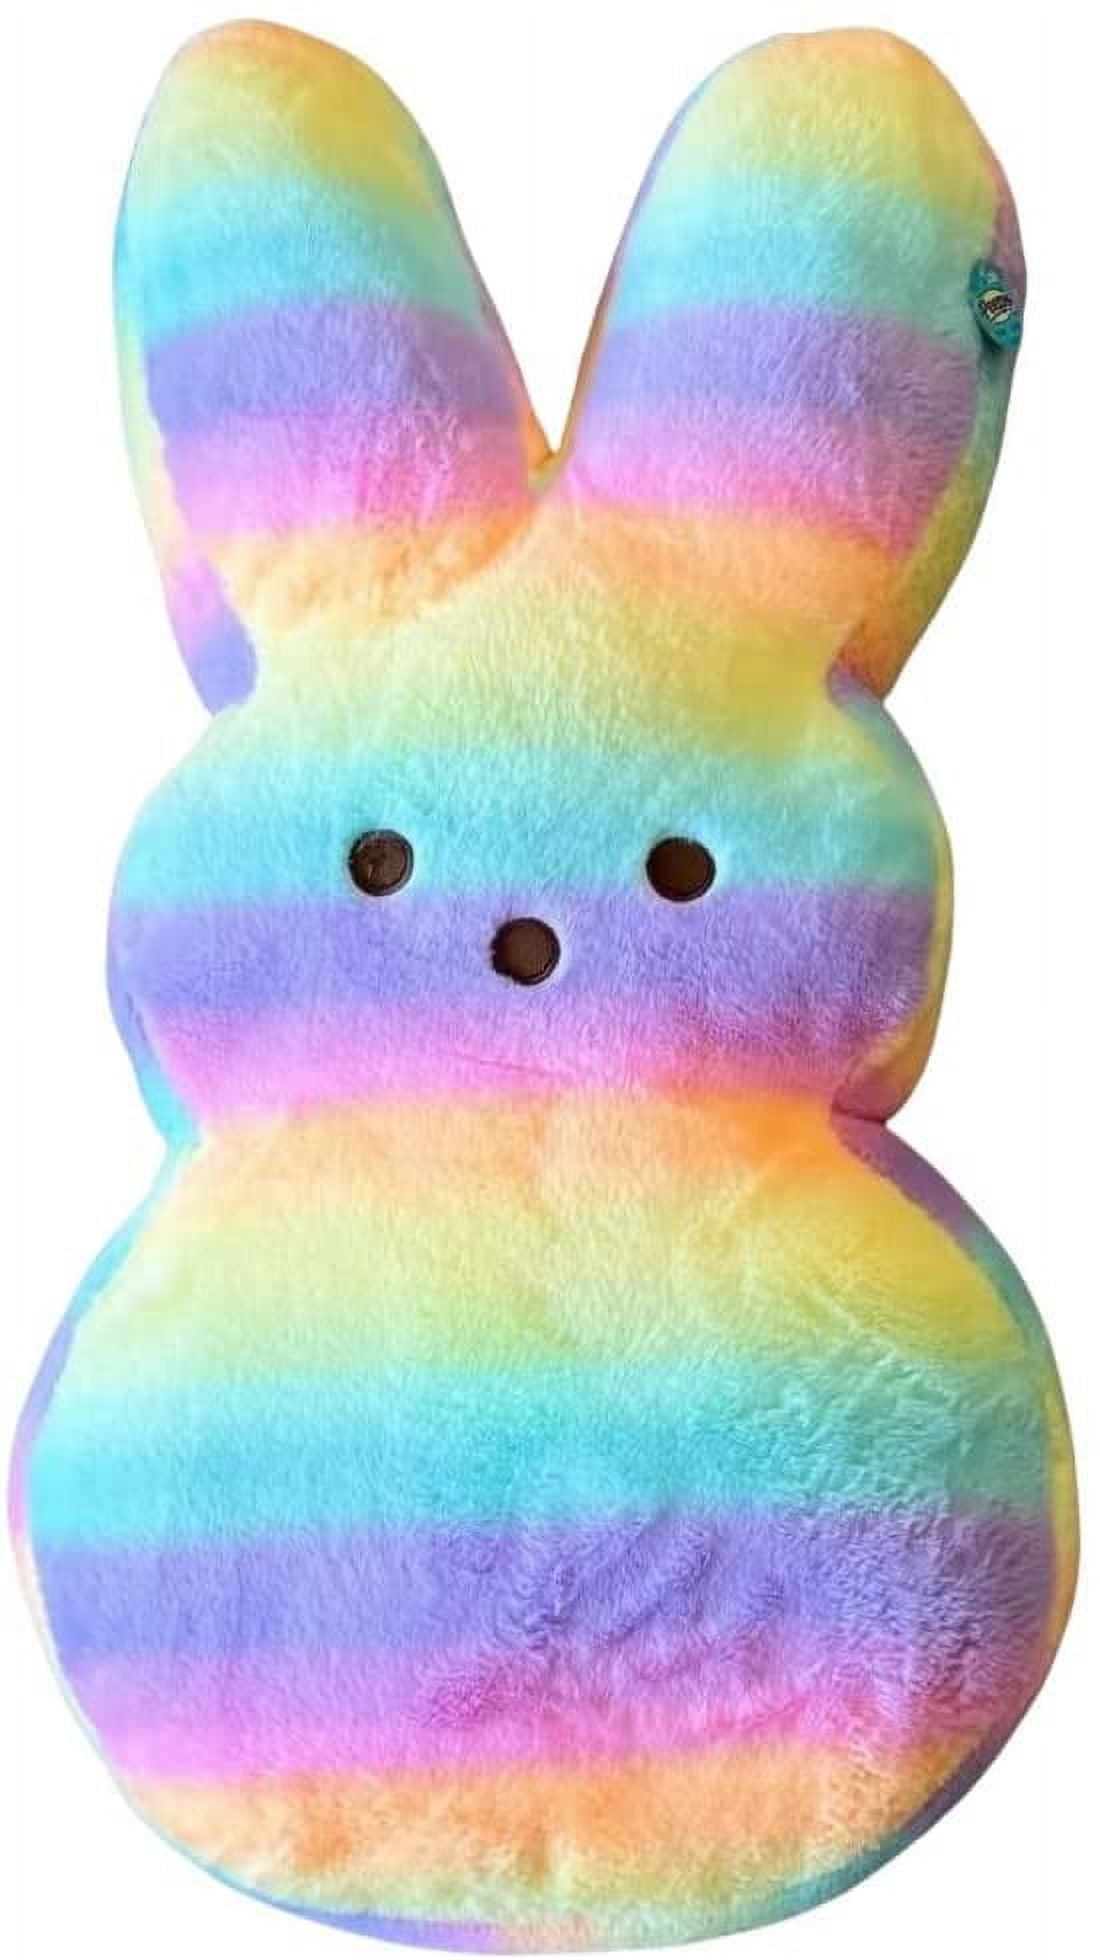 Jumbo Peeps Bunny Plush 38 Inch Animal Toy Easter, Rainbow Stripes 